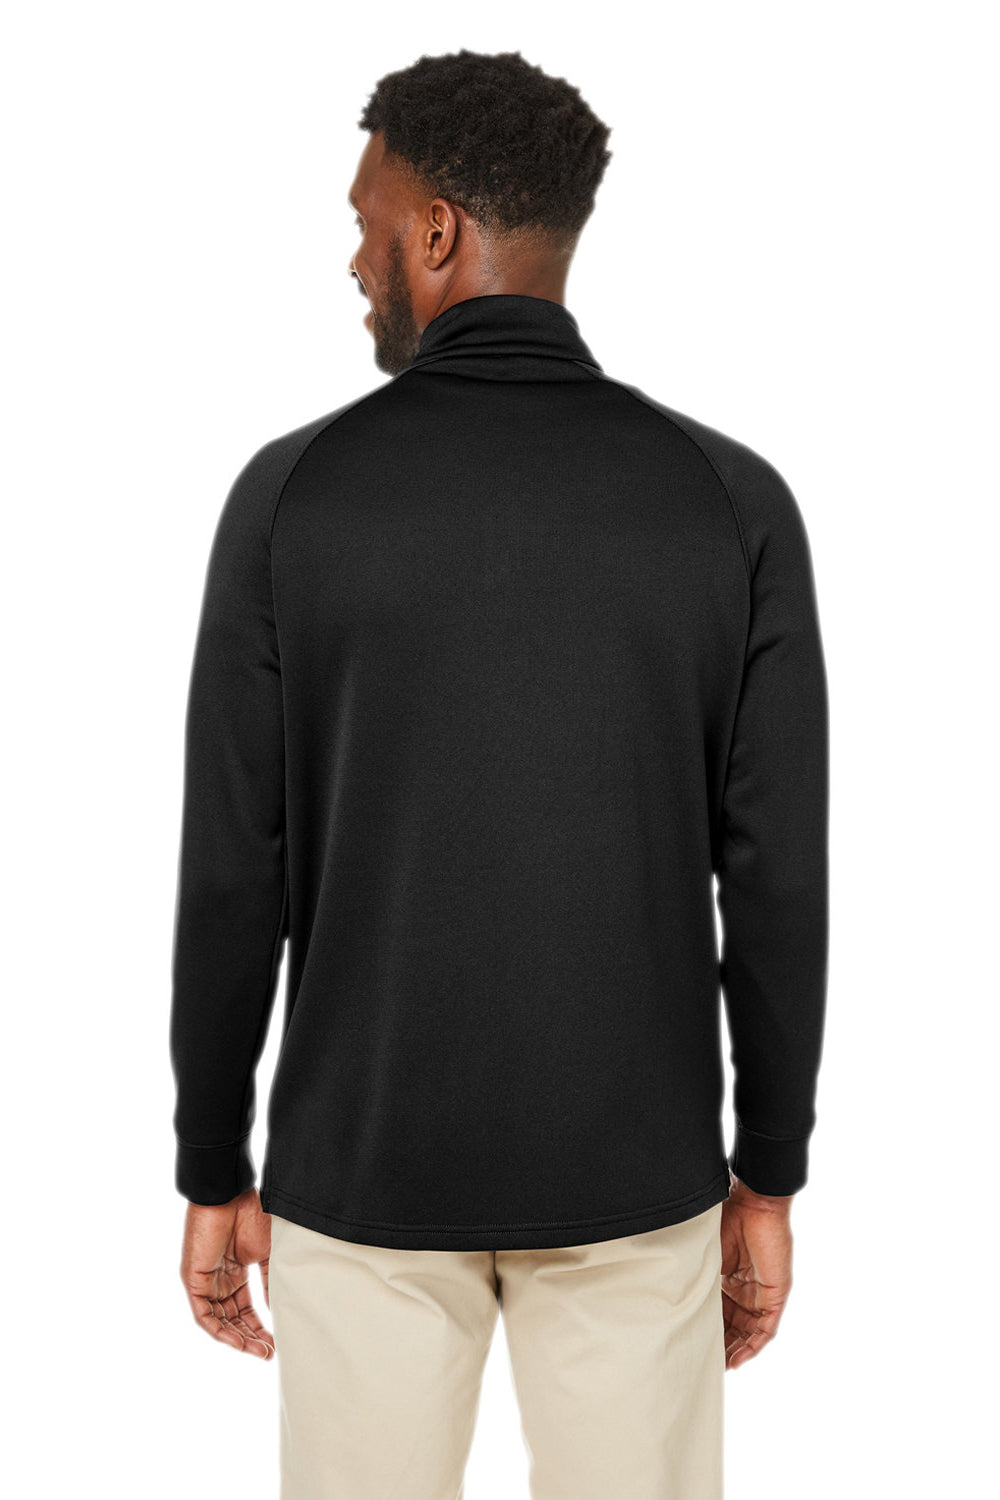 Core 365 CE801 Mens Fusion ChromaSoft Fleece 1/4 Zip Sweatshirt Black Back